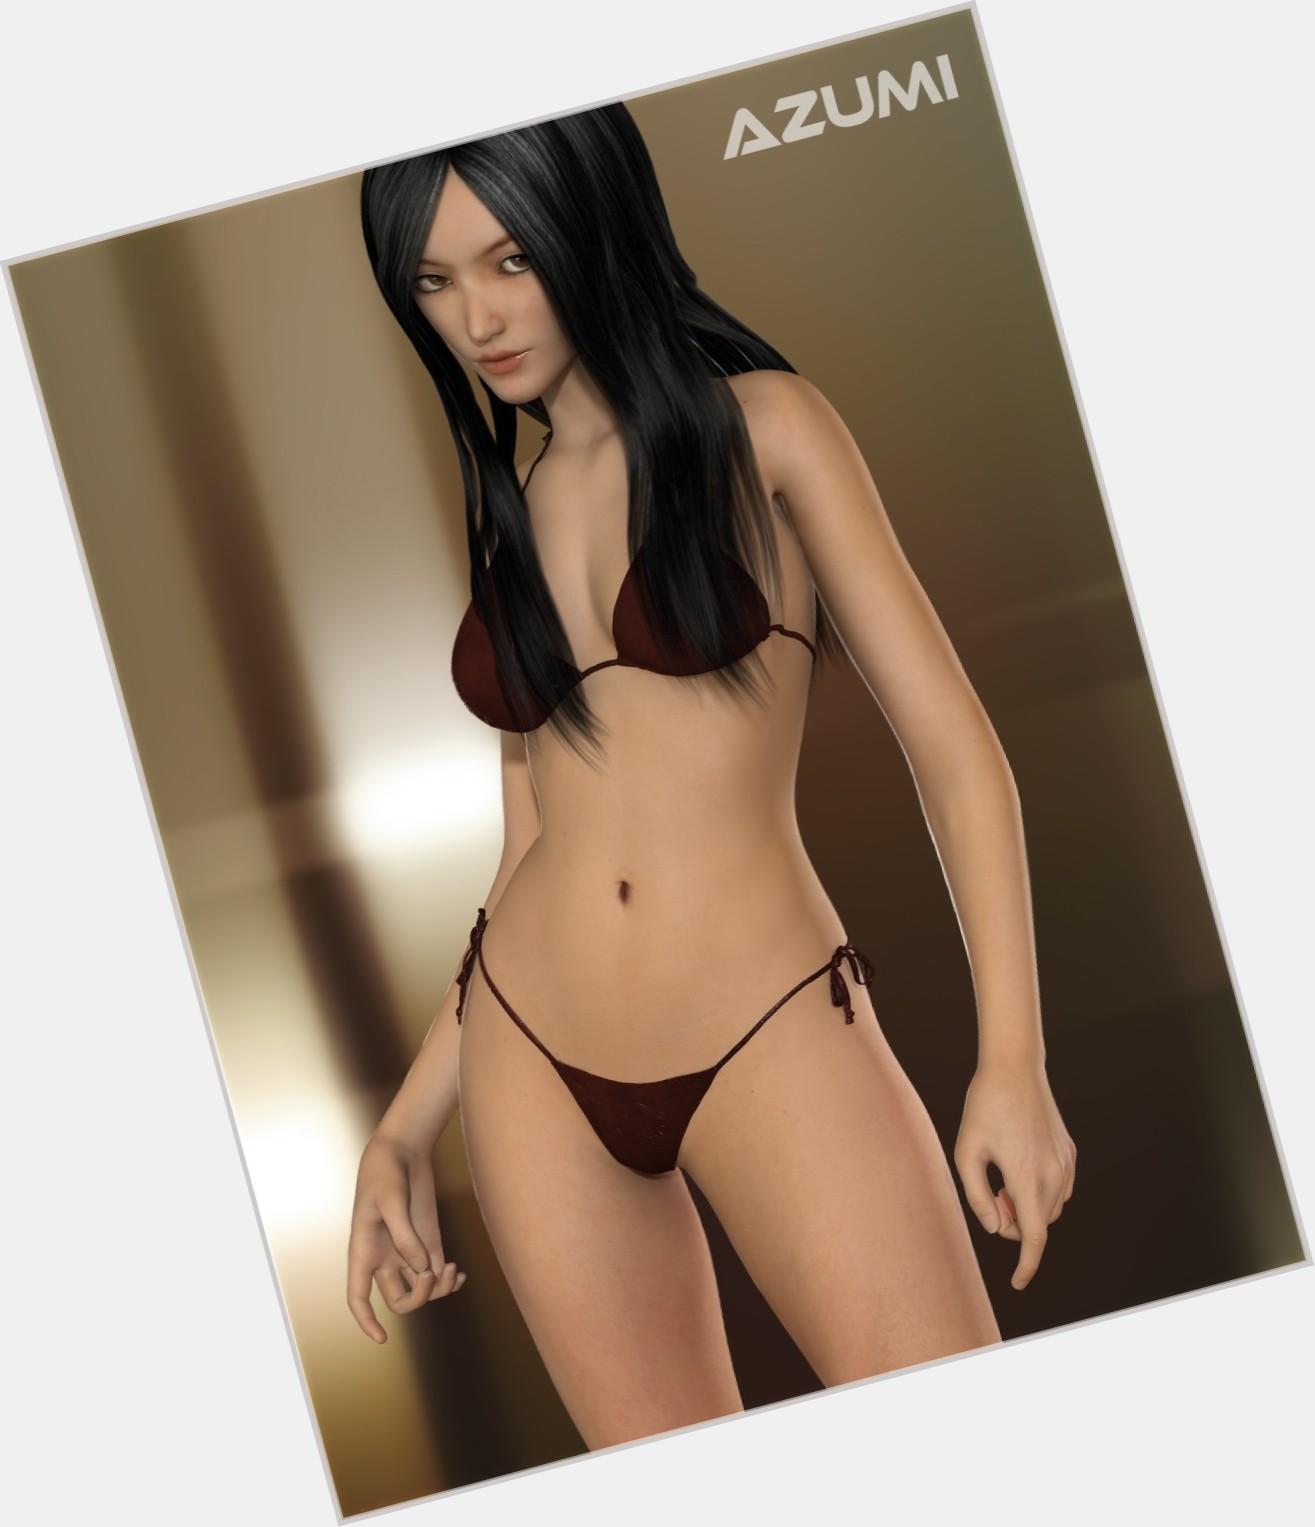 Azumi shirtless bikini